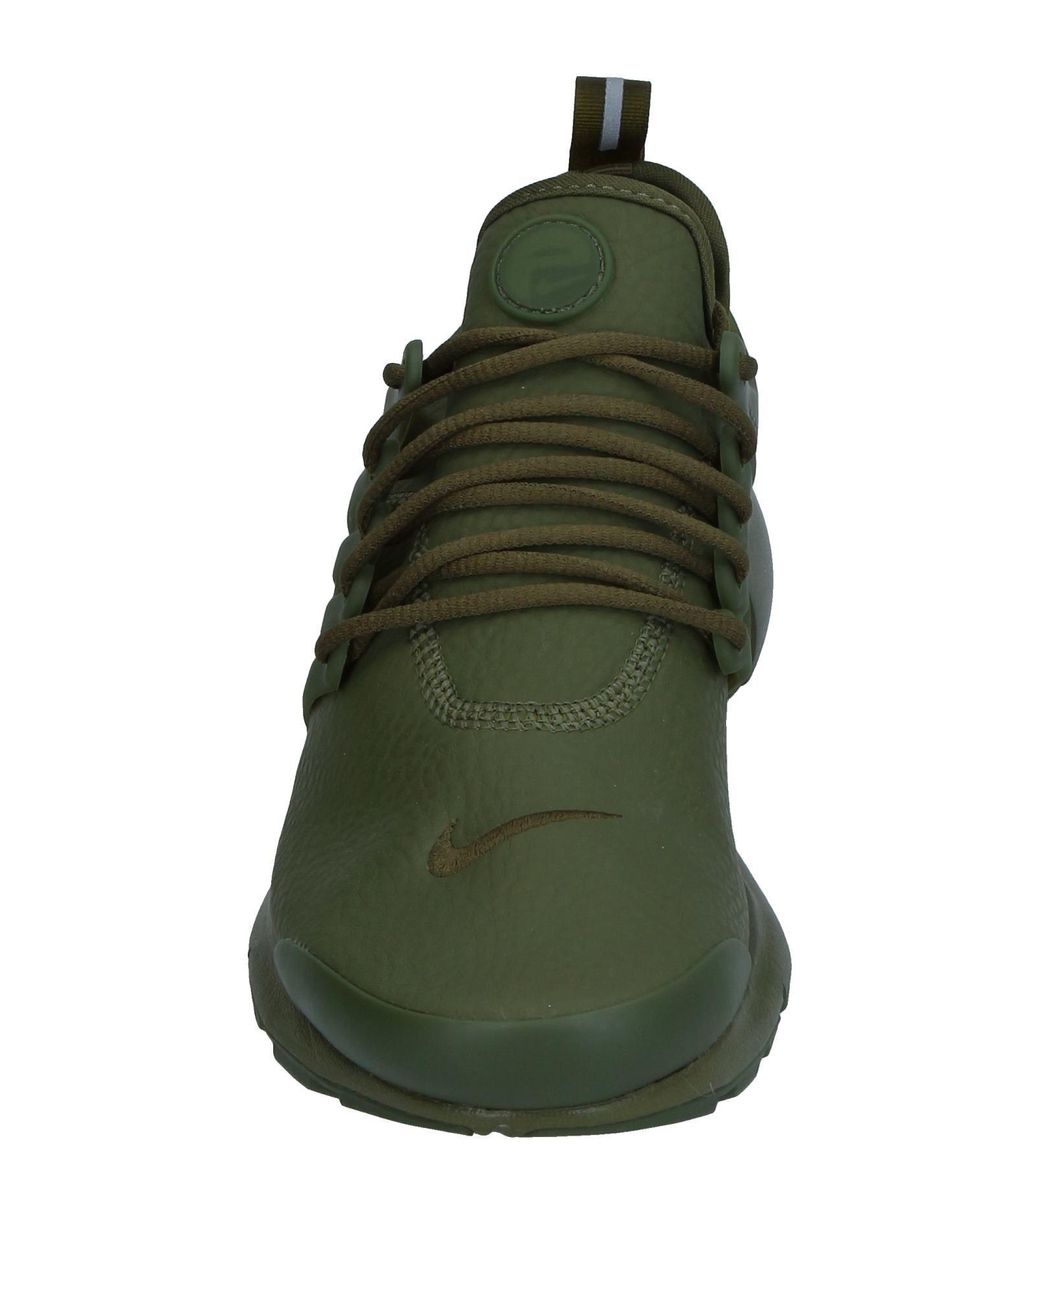 Nike Low-tops & Sneakers in Military Green (Green) | Lyst Australia